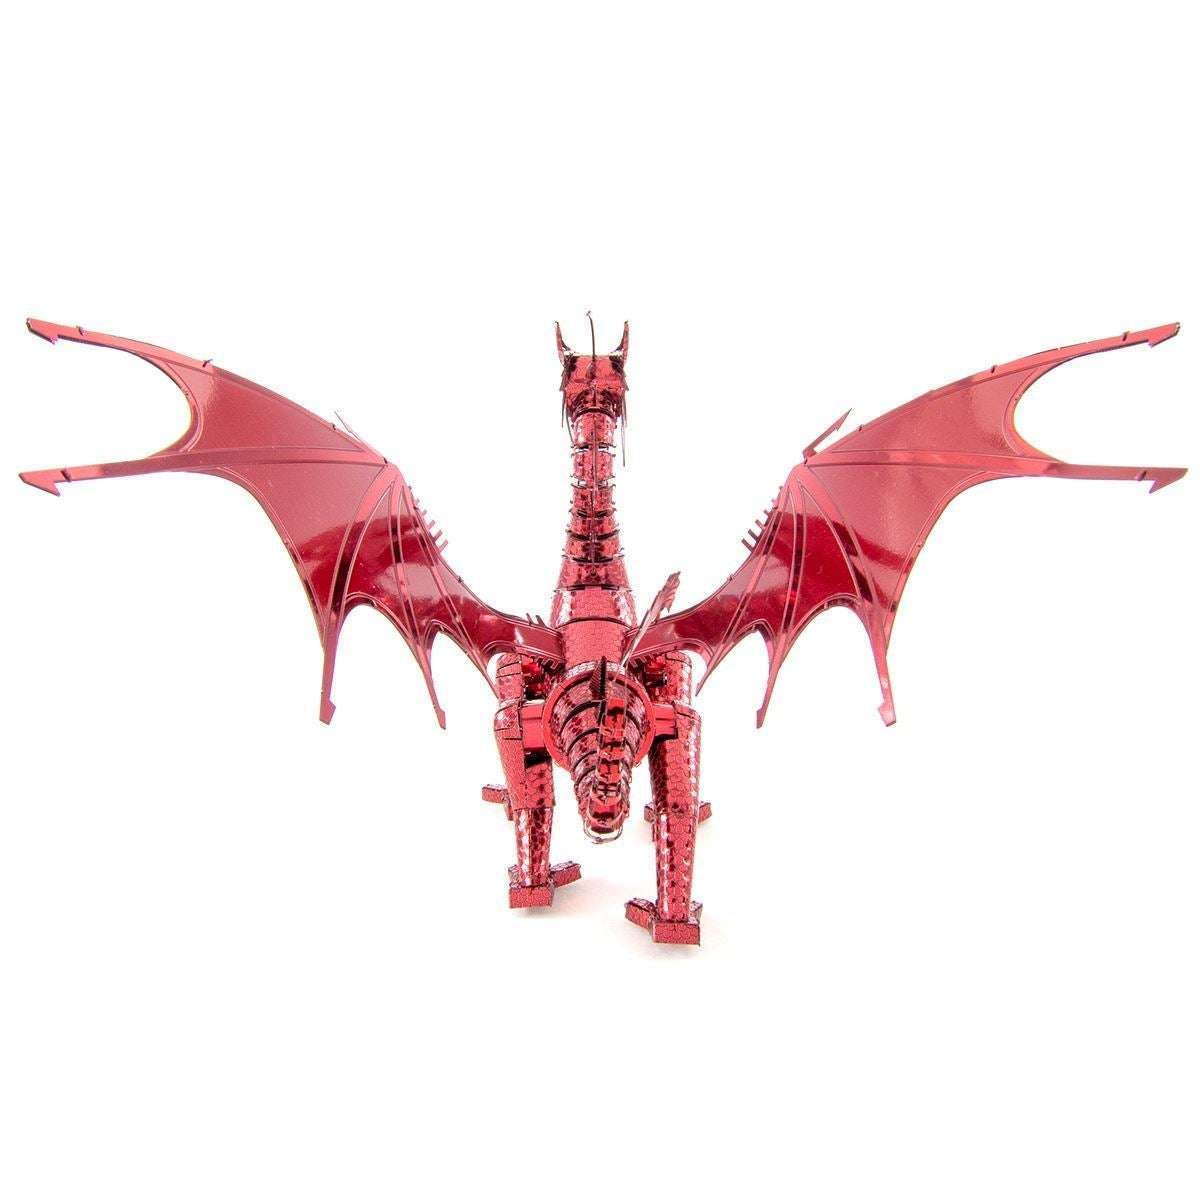 Red Dragon 3D Laser Cut Model Kit